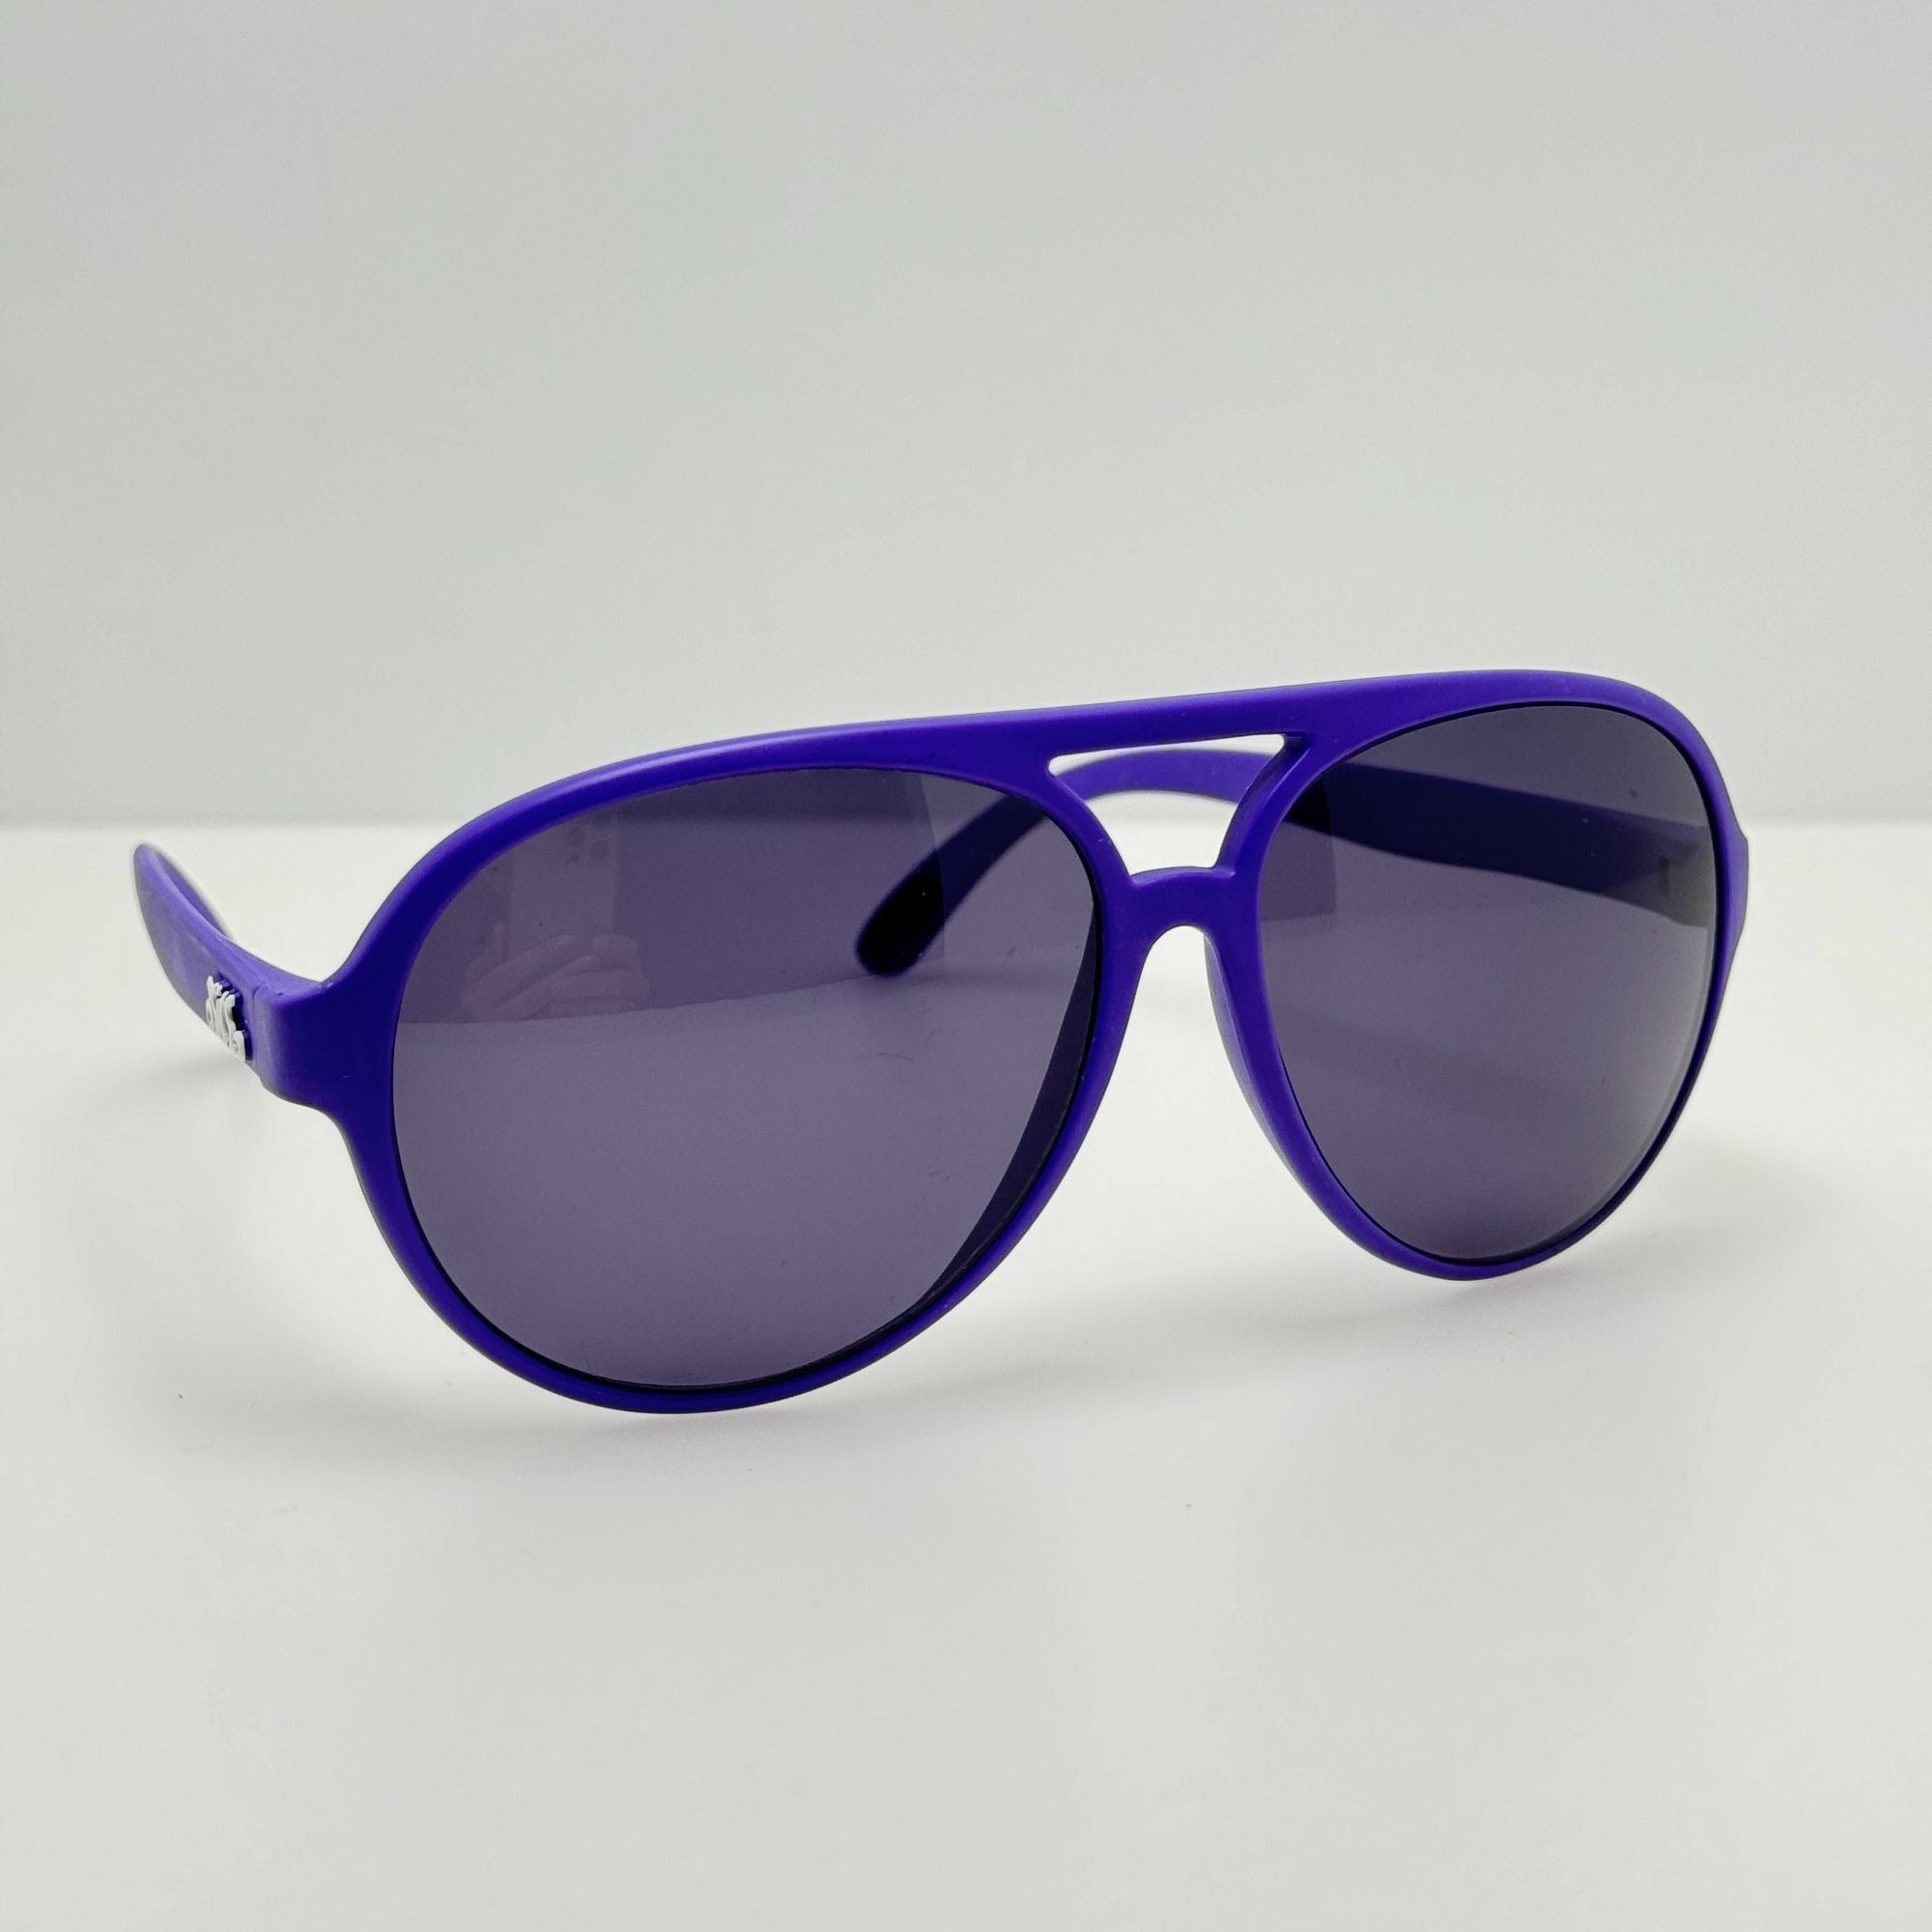 Asics-Sunglasses-Aviator-Purple-Japan-Sunglasses